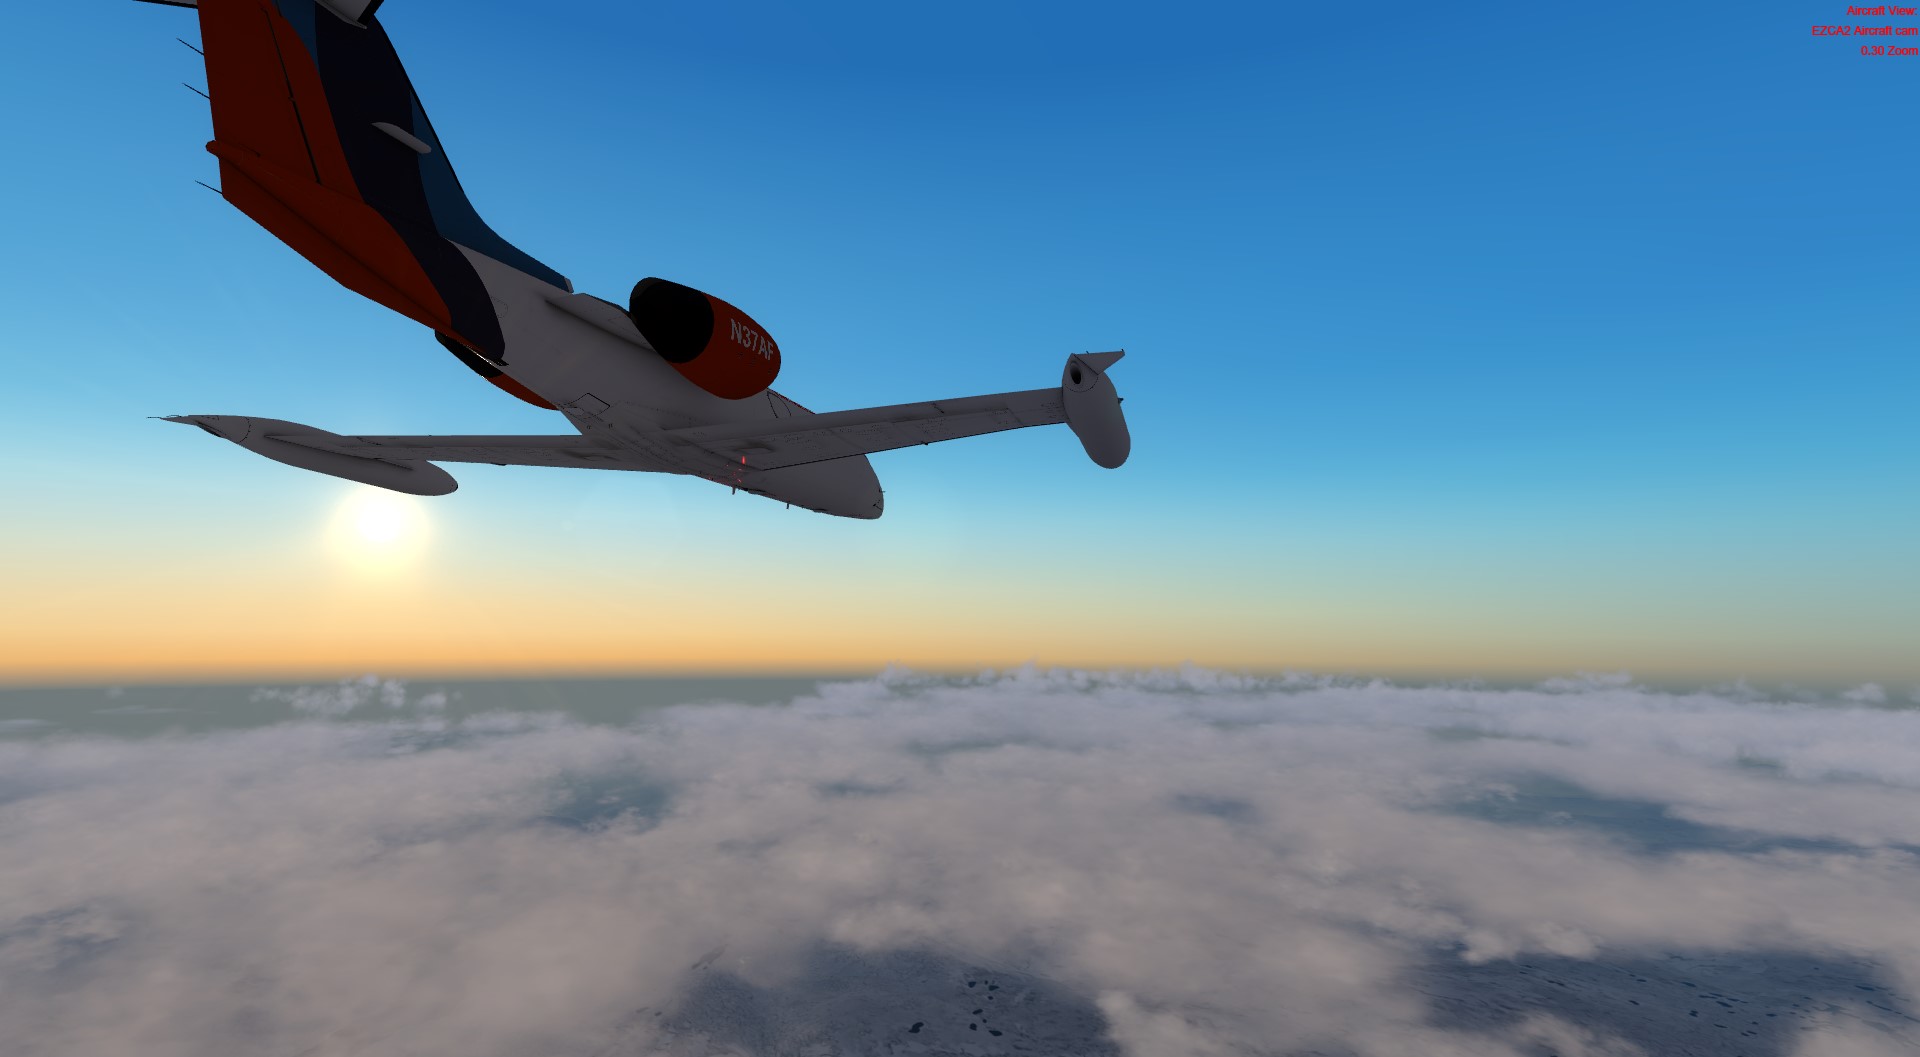 Flysimware – Learjet 35A 评测与冰岛送货之旅-6704 